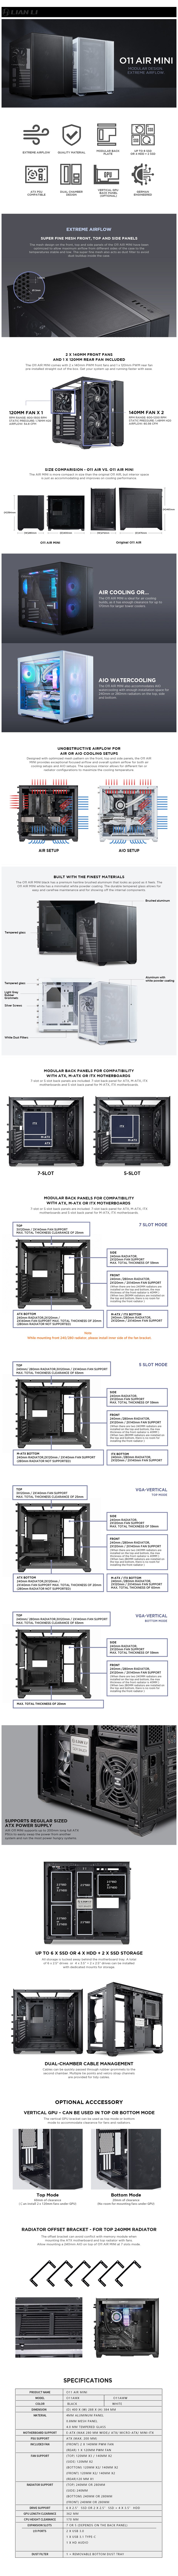 Lian Li O11 Air Mini Mesh & Tempered Glass E-ATX Case - Black - Overview 1